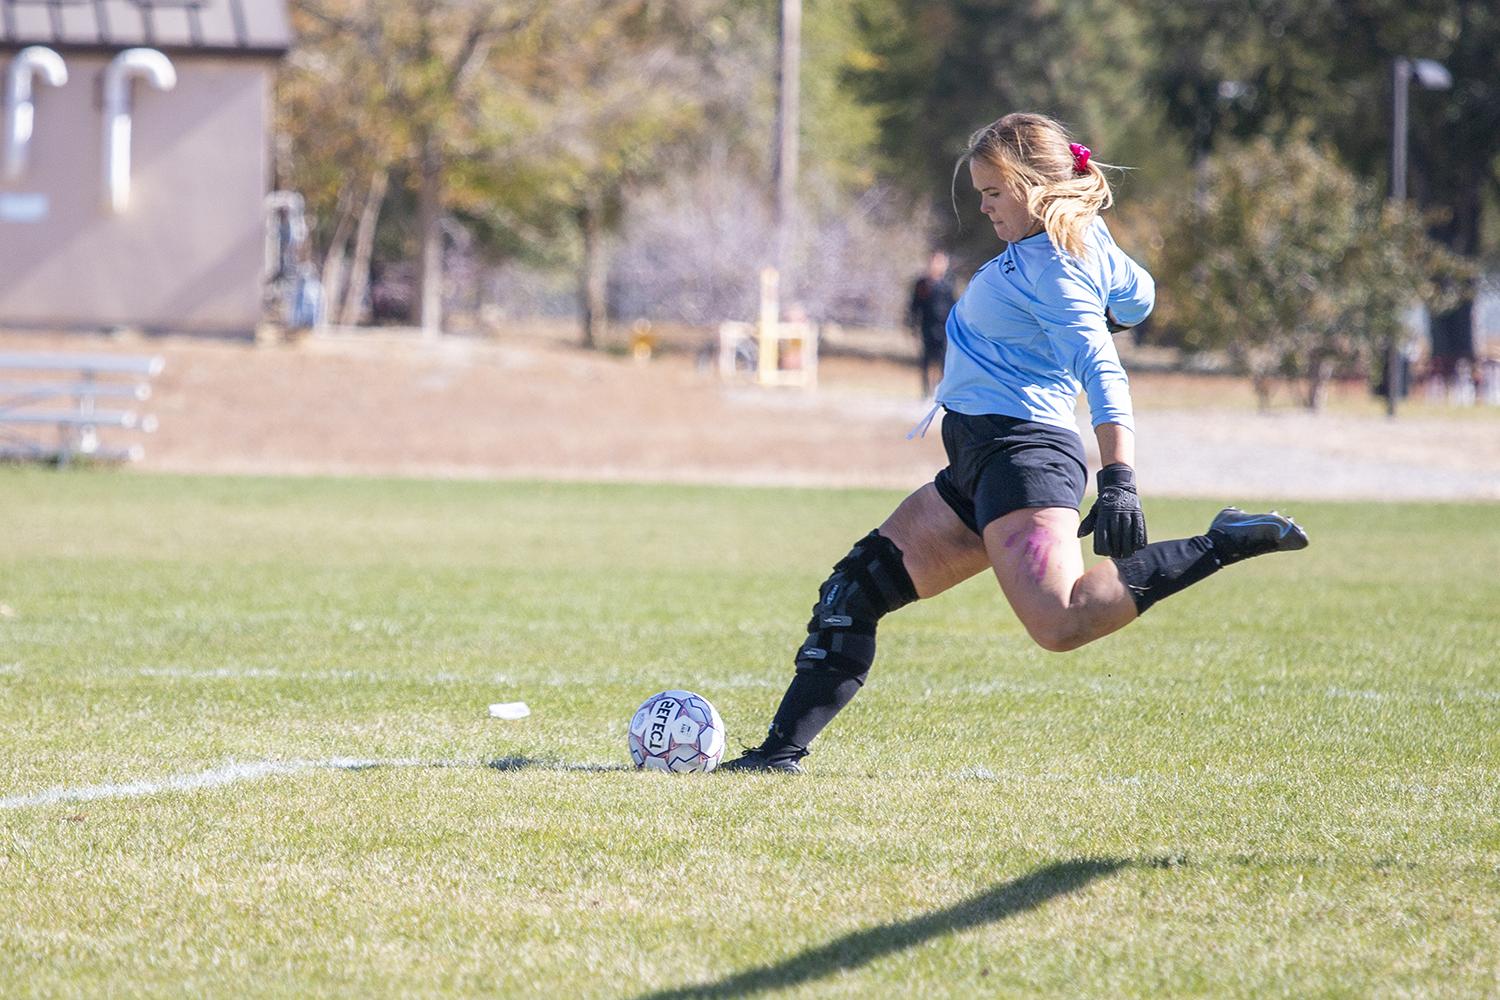 CWC's women's goalie kicks the soccer ball